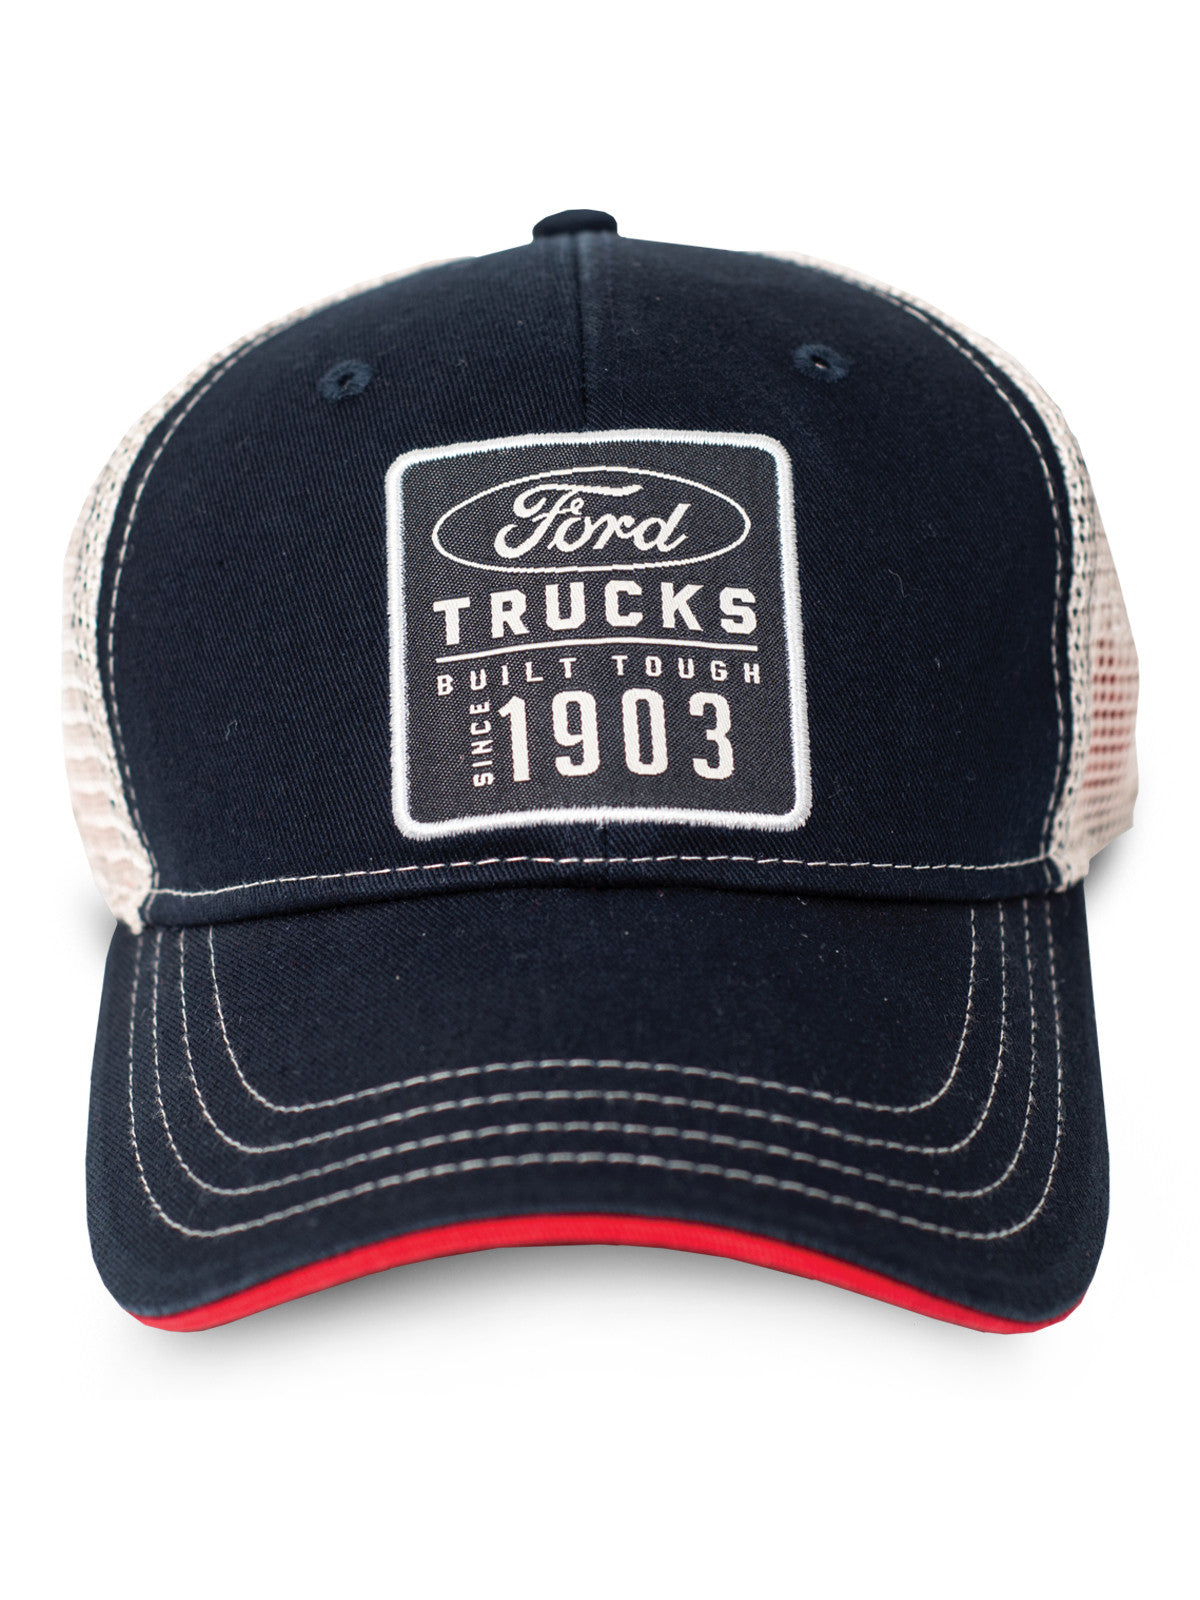 Buck Wear 9132 Ford Shop Logo Cap in Navy Front View